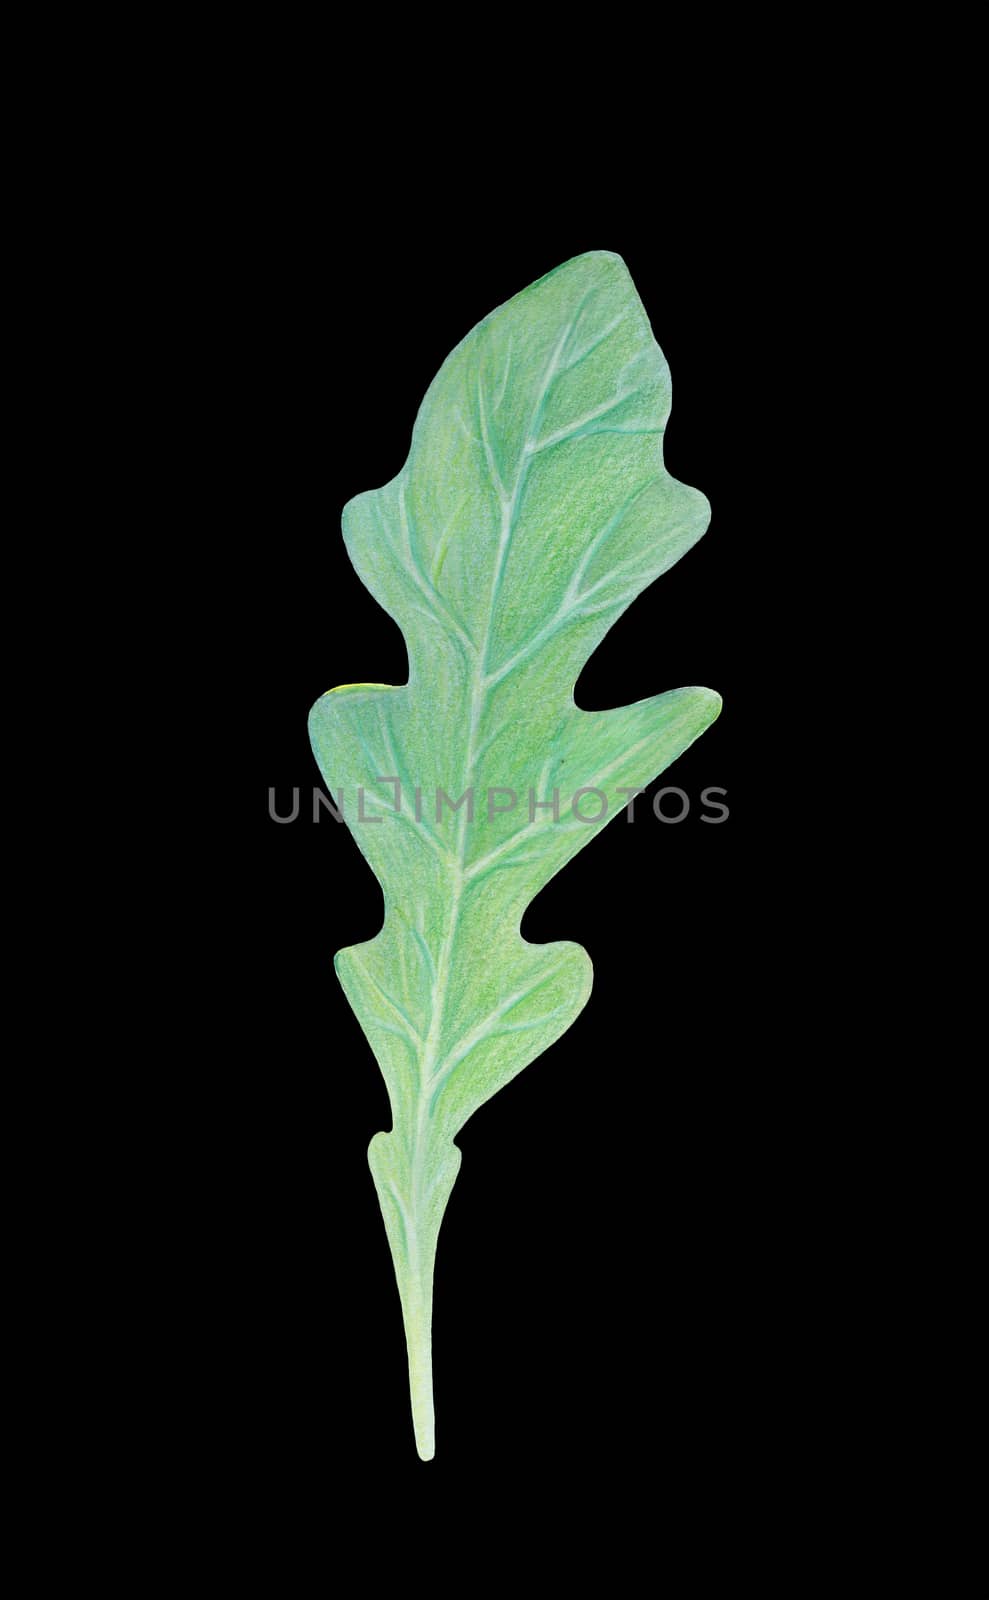 Arugula rucola, rocket salad fresh green leaf isolated on black background. Watercolor hand drawn illustration. Fresh herbs. Vegetarian Ingredient.For logo, packaging, print, organic food,market store by sshisshka